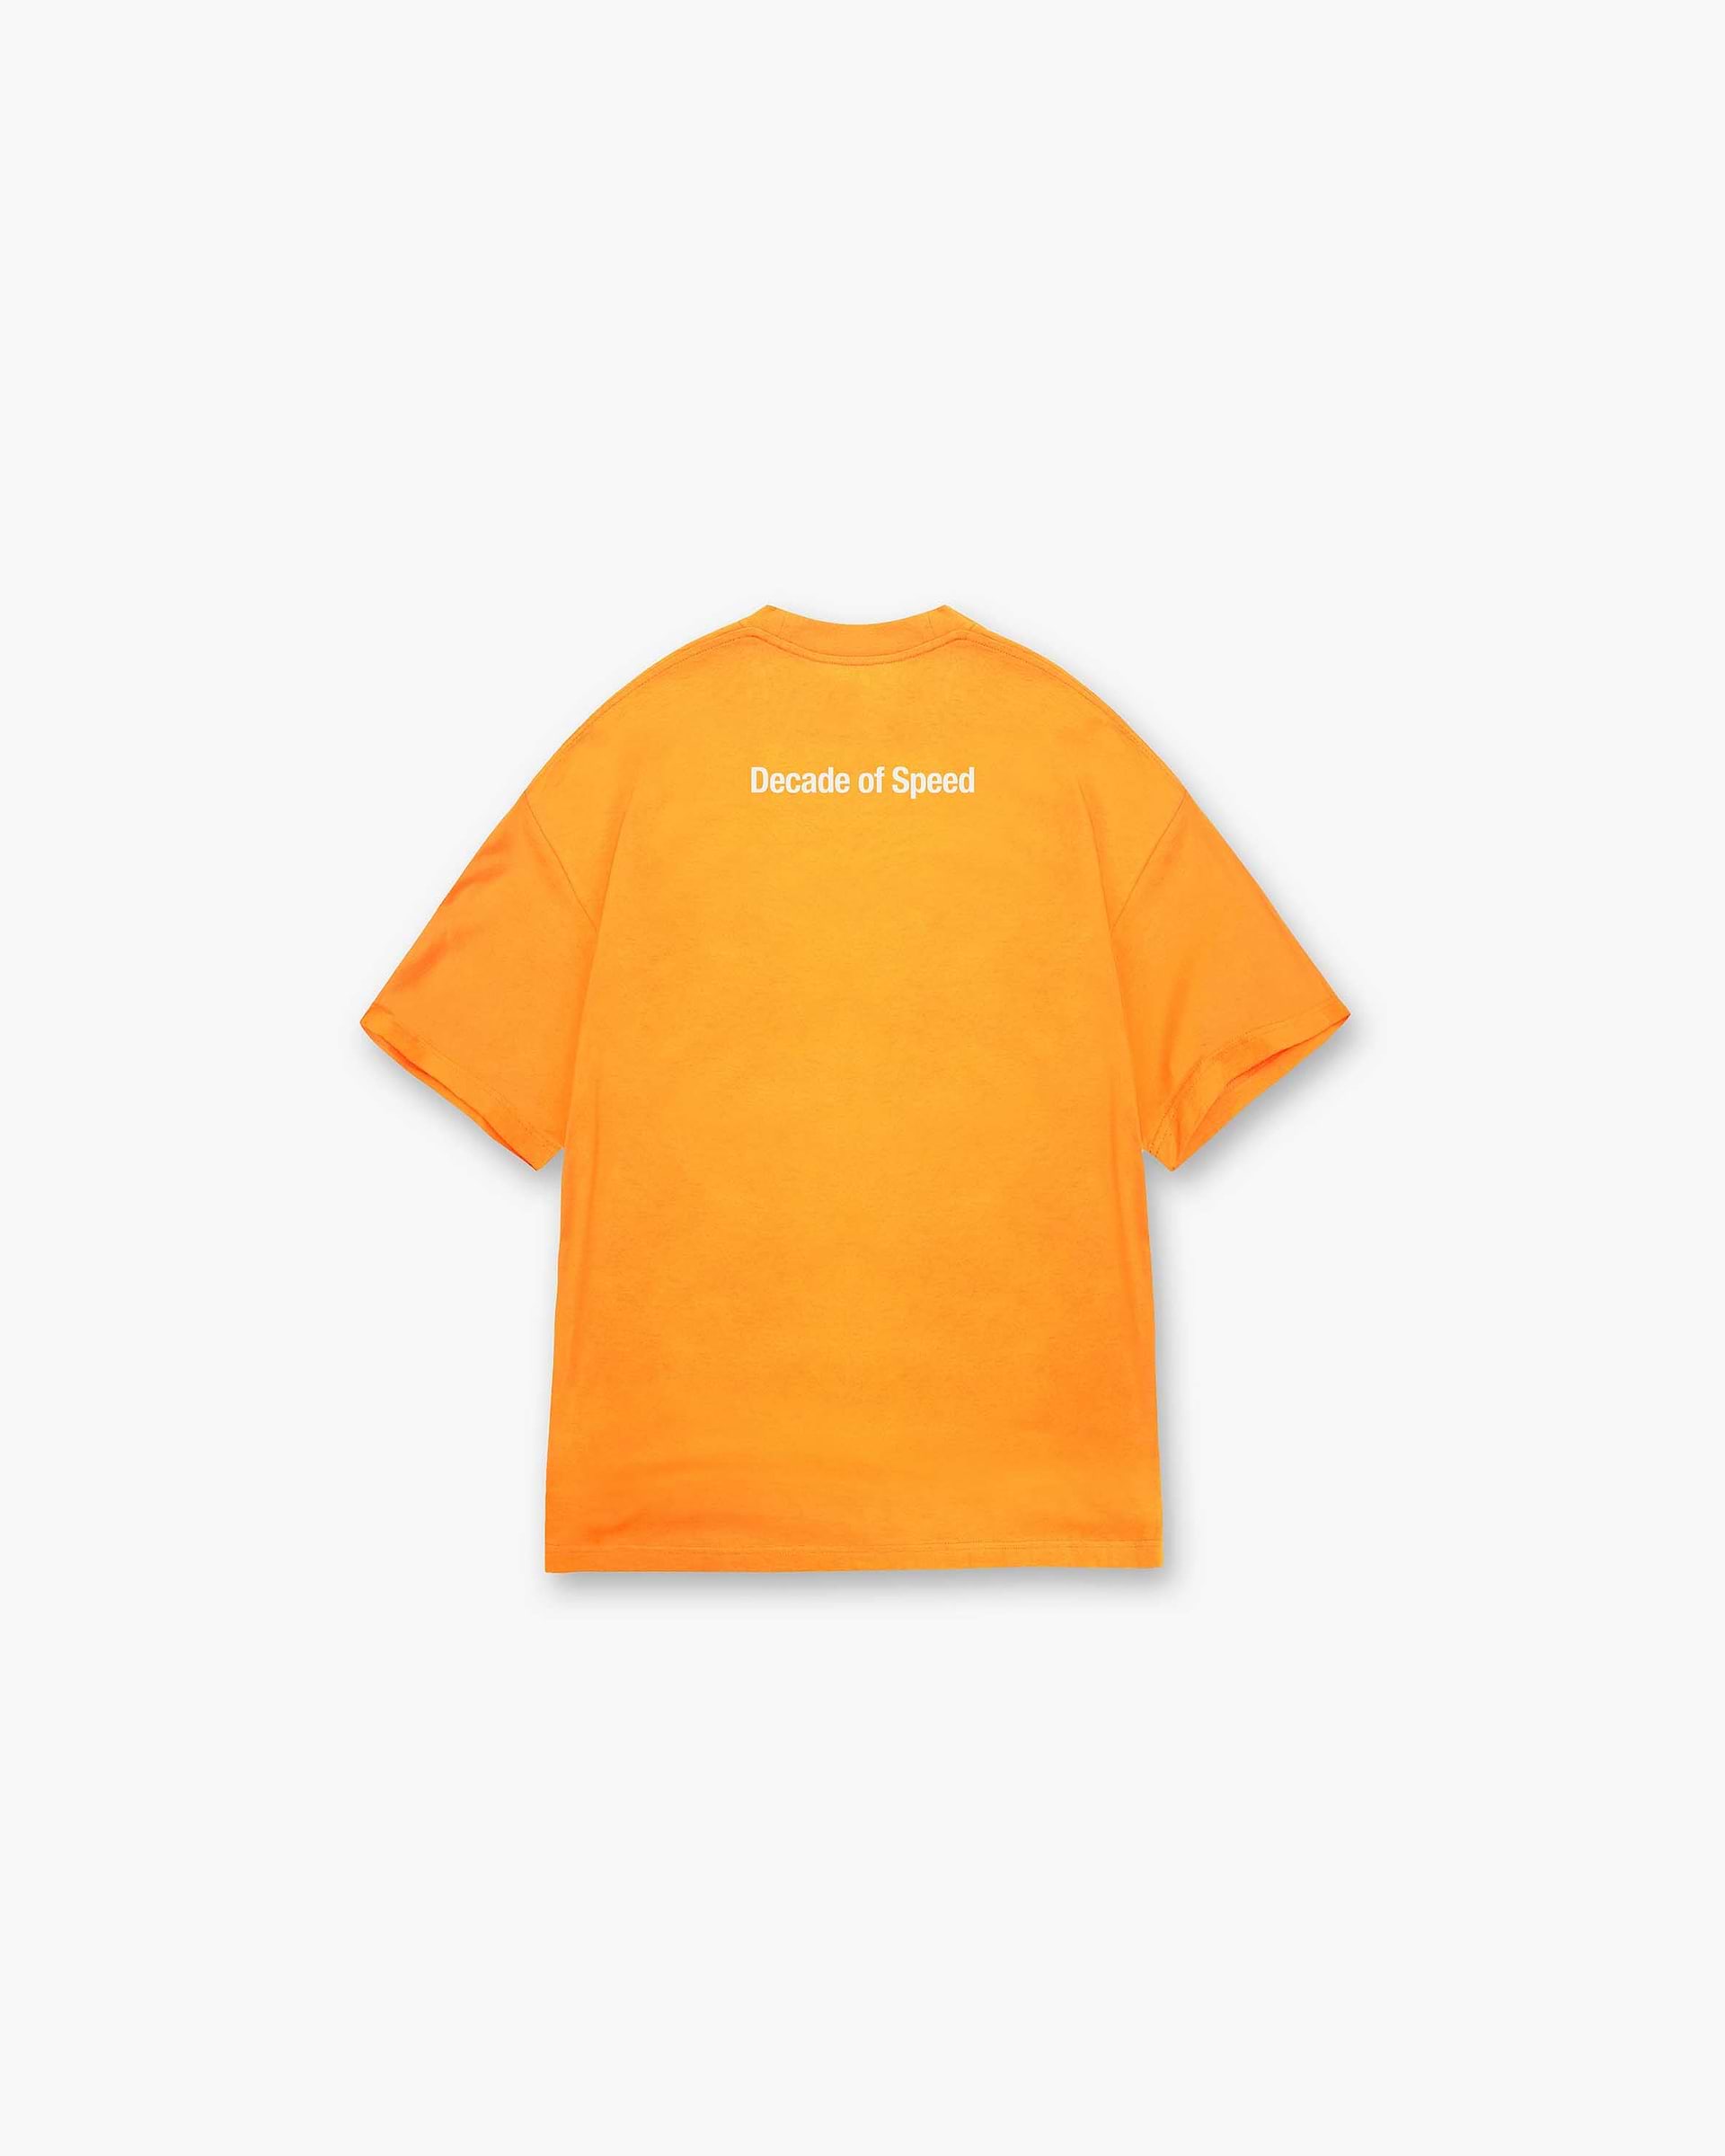 Decade of Speed T-Shirt | Neon Orange T-Shirts SS23 | Represent Clo